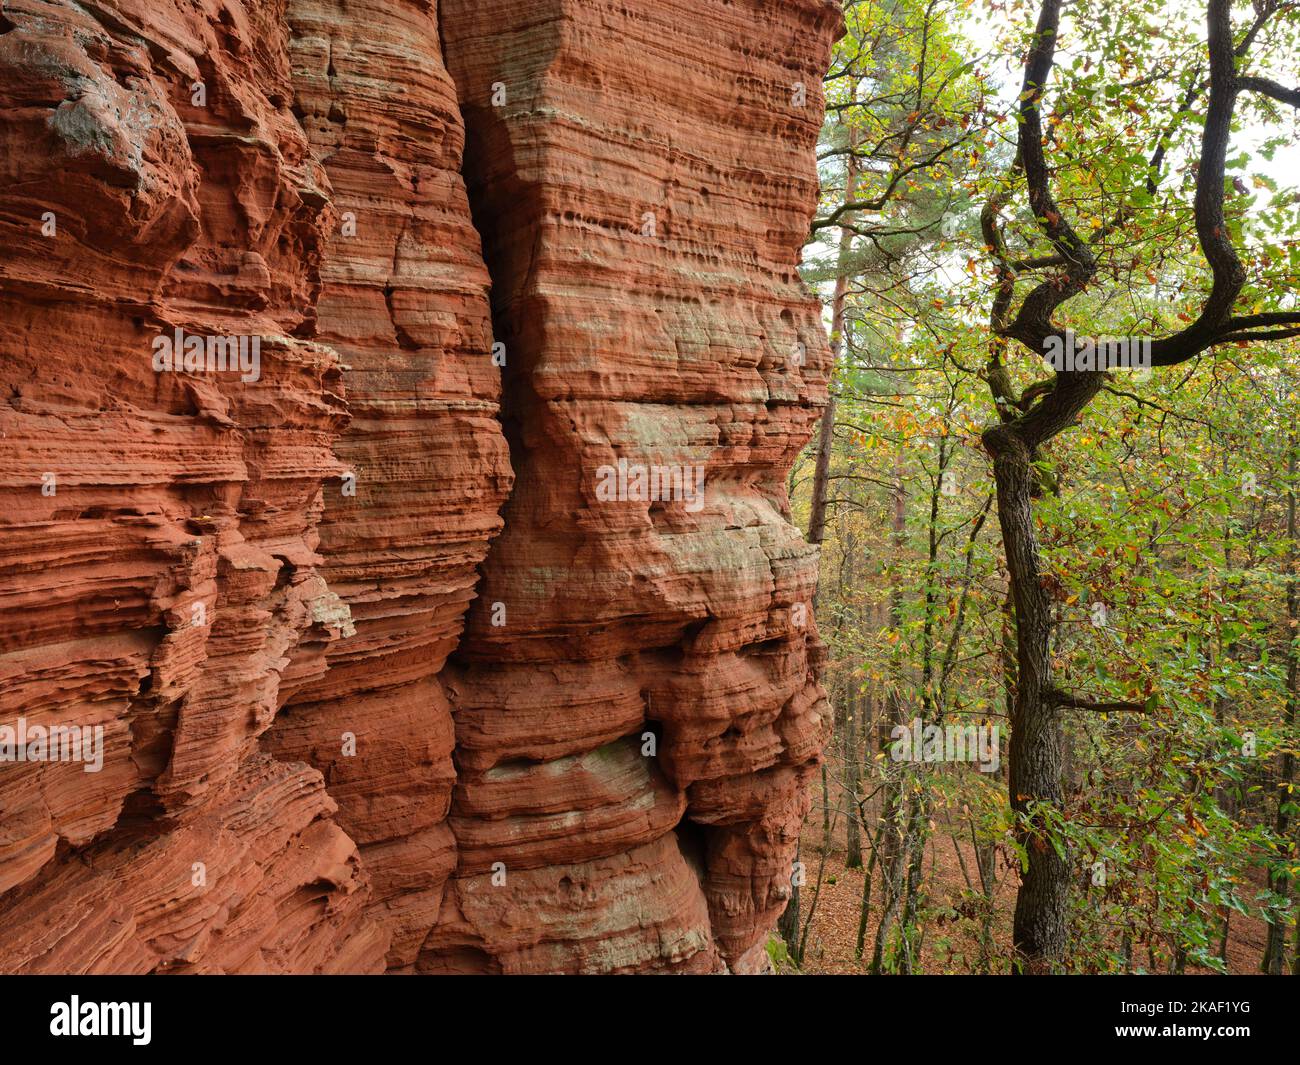 The rock formation of the Altschlossfelsen. Eppenbrunn, Rhineland-Palatinate, Germany. Stock Photo